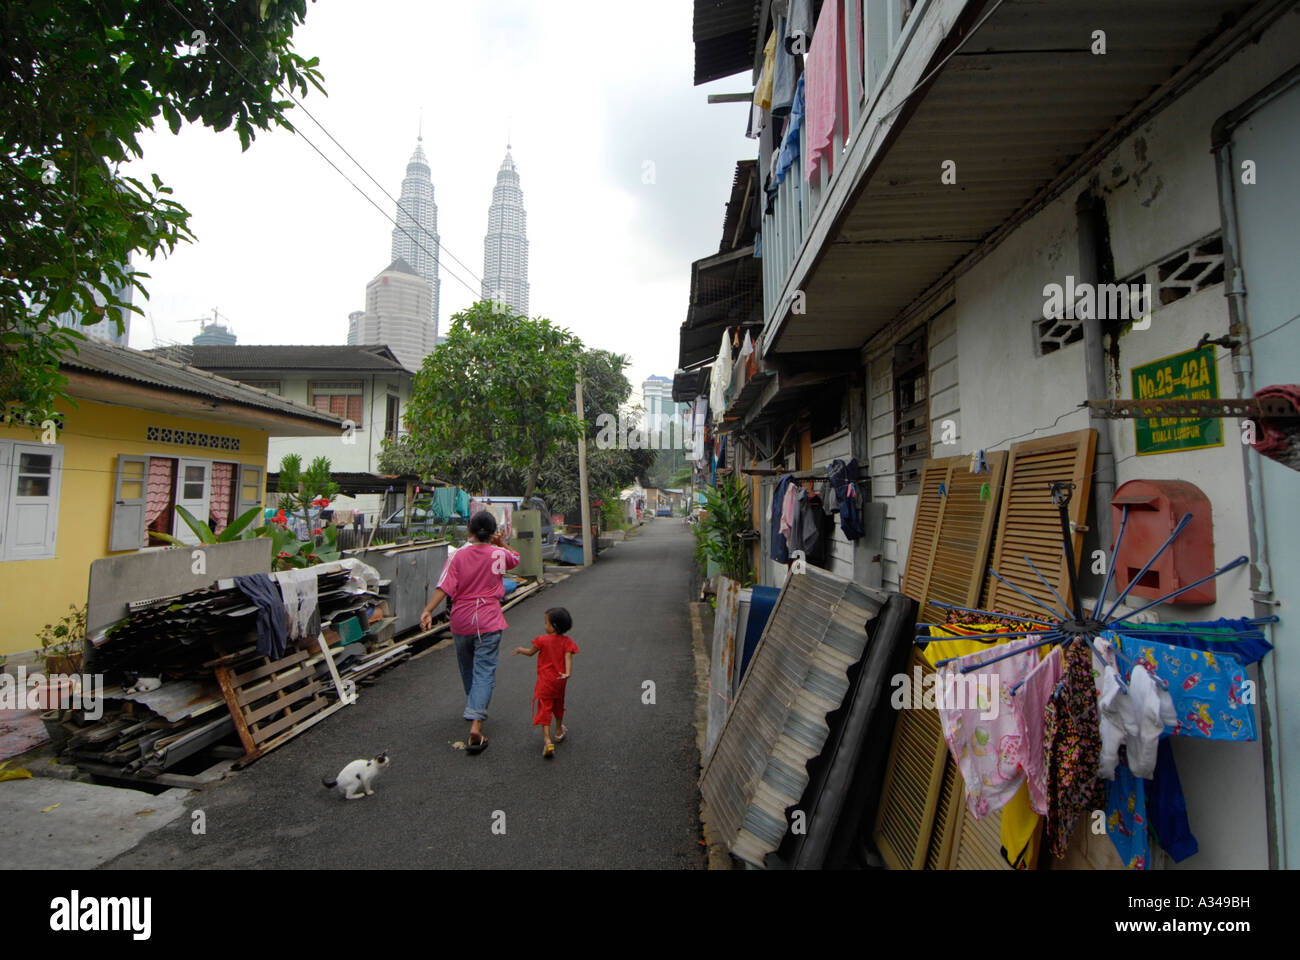 Lower cost housing in a neighbourhood near the Petronas Towers, Kuala Lumpur,  Malaysia Stock Photo